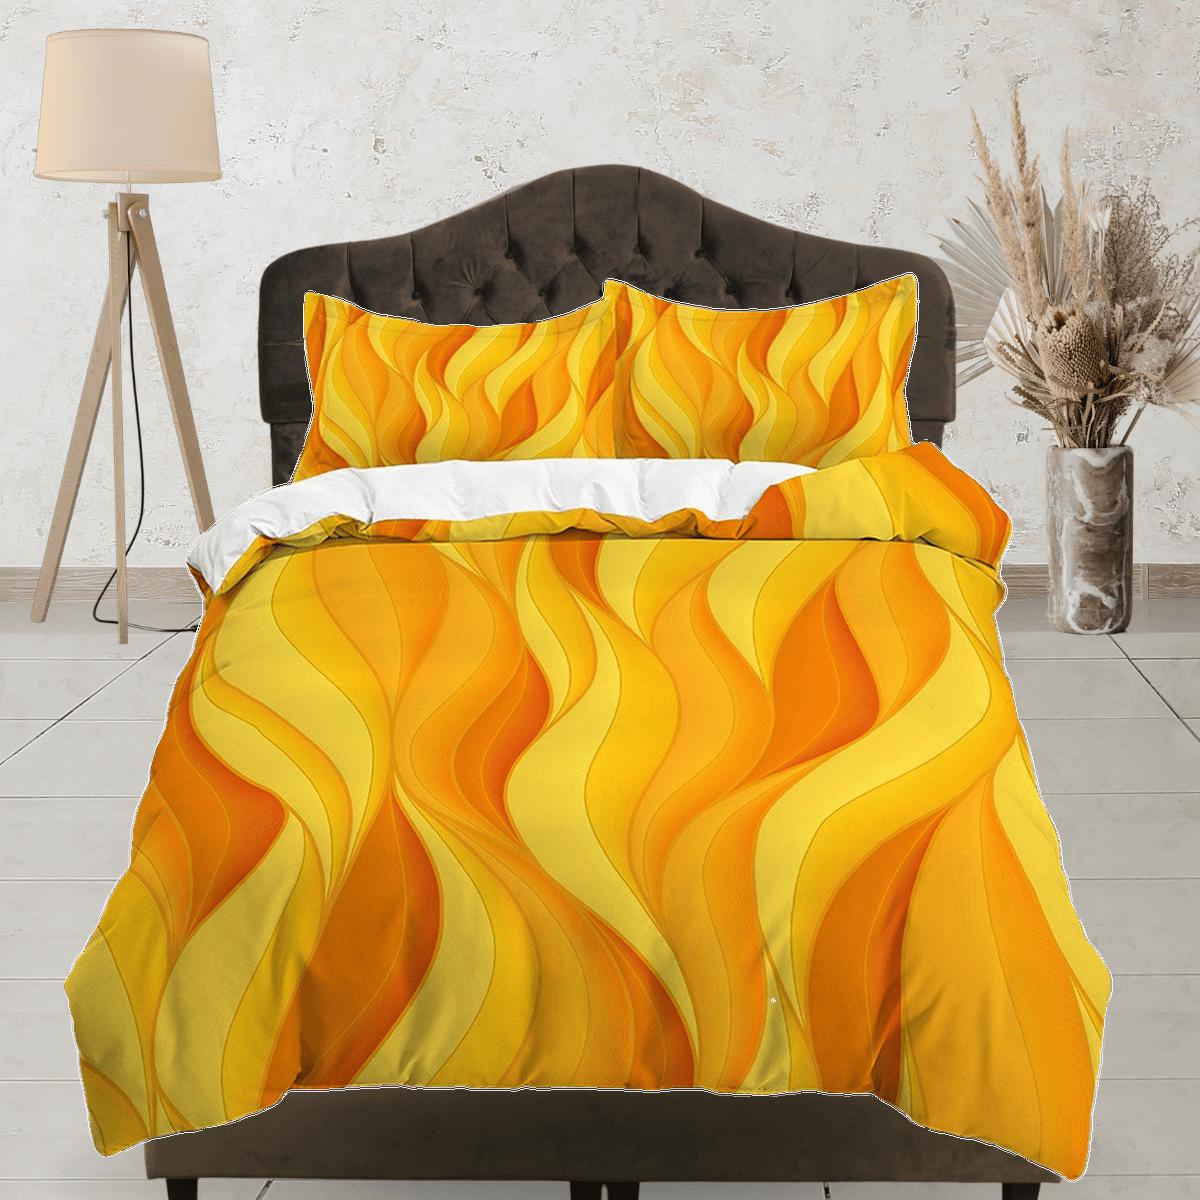 daintyduvet Mid century modern bedroom art set orange yellow duvet cover, aesthetic room decor boho chic bedding set full, colorful maximalist retro